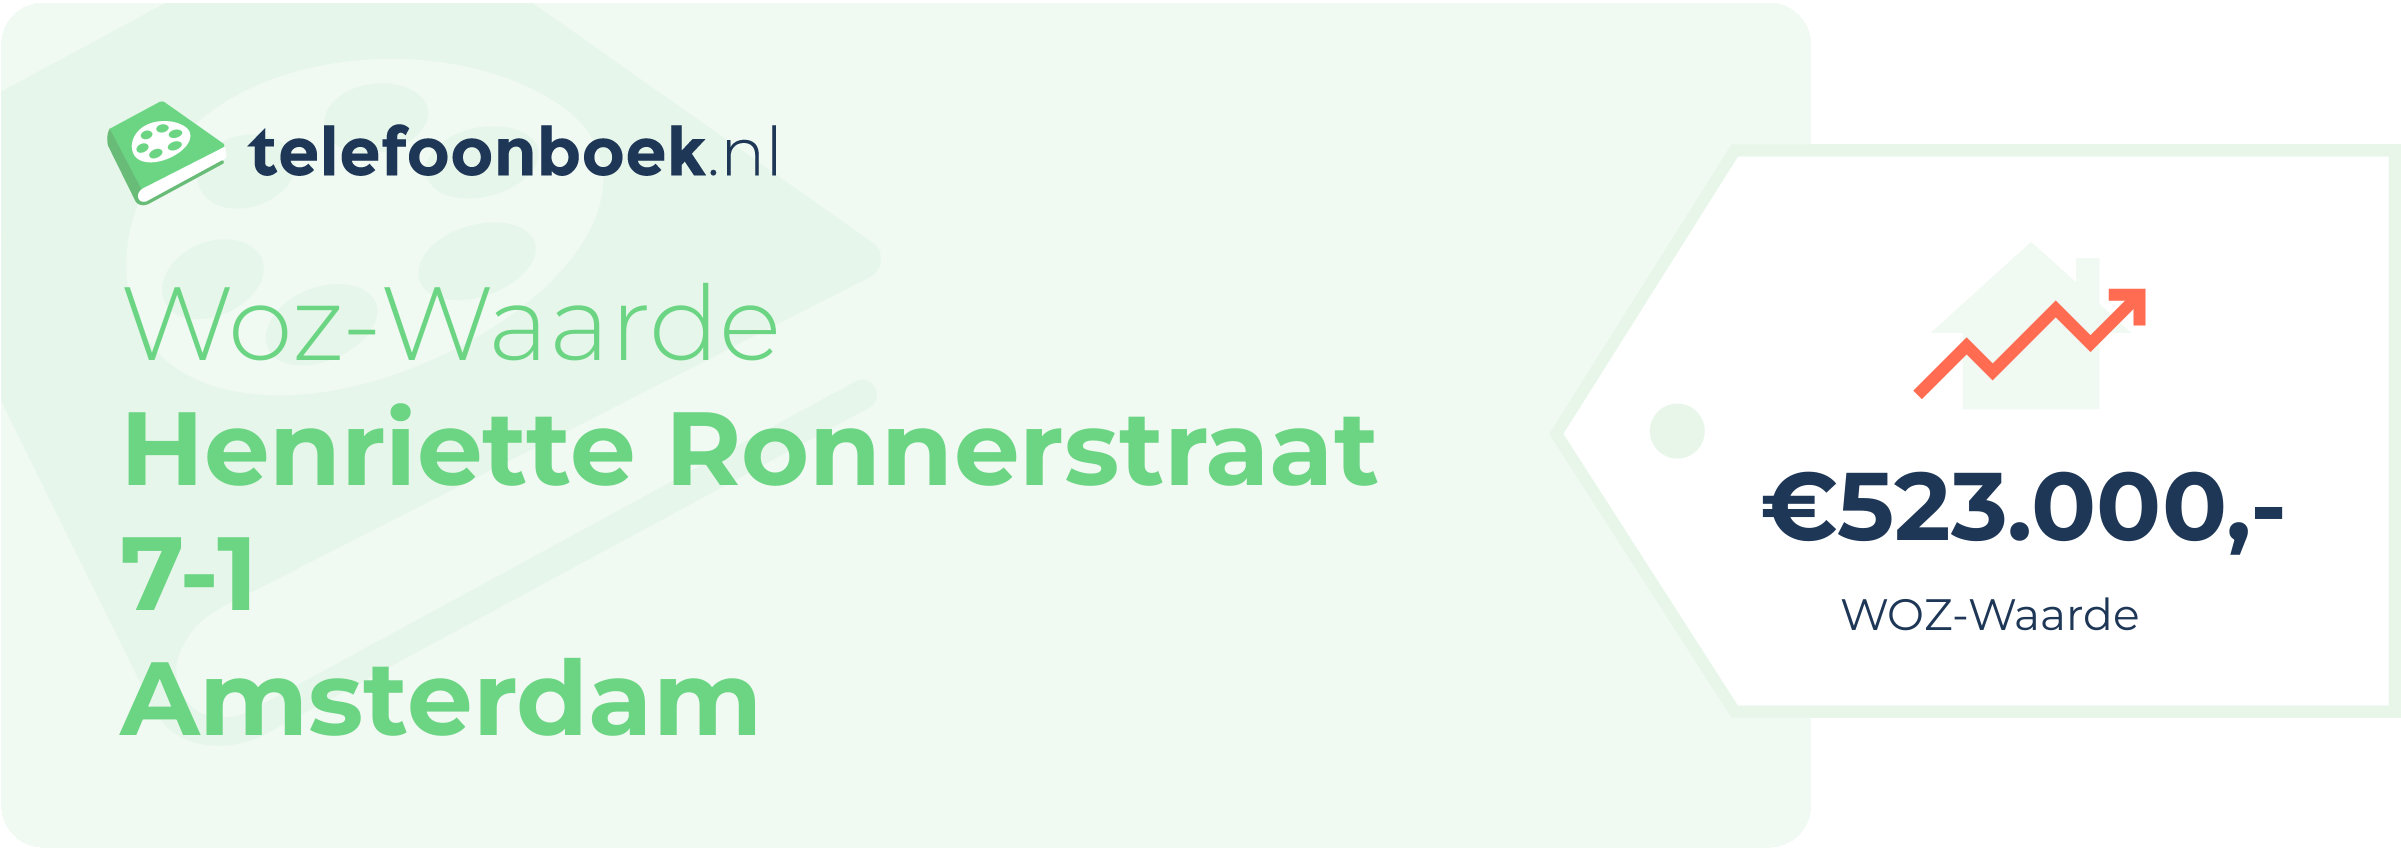 WOZ-waarde Henriette Ronnerstraat 7-1 Amsterdam